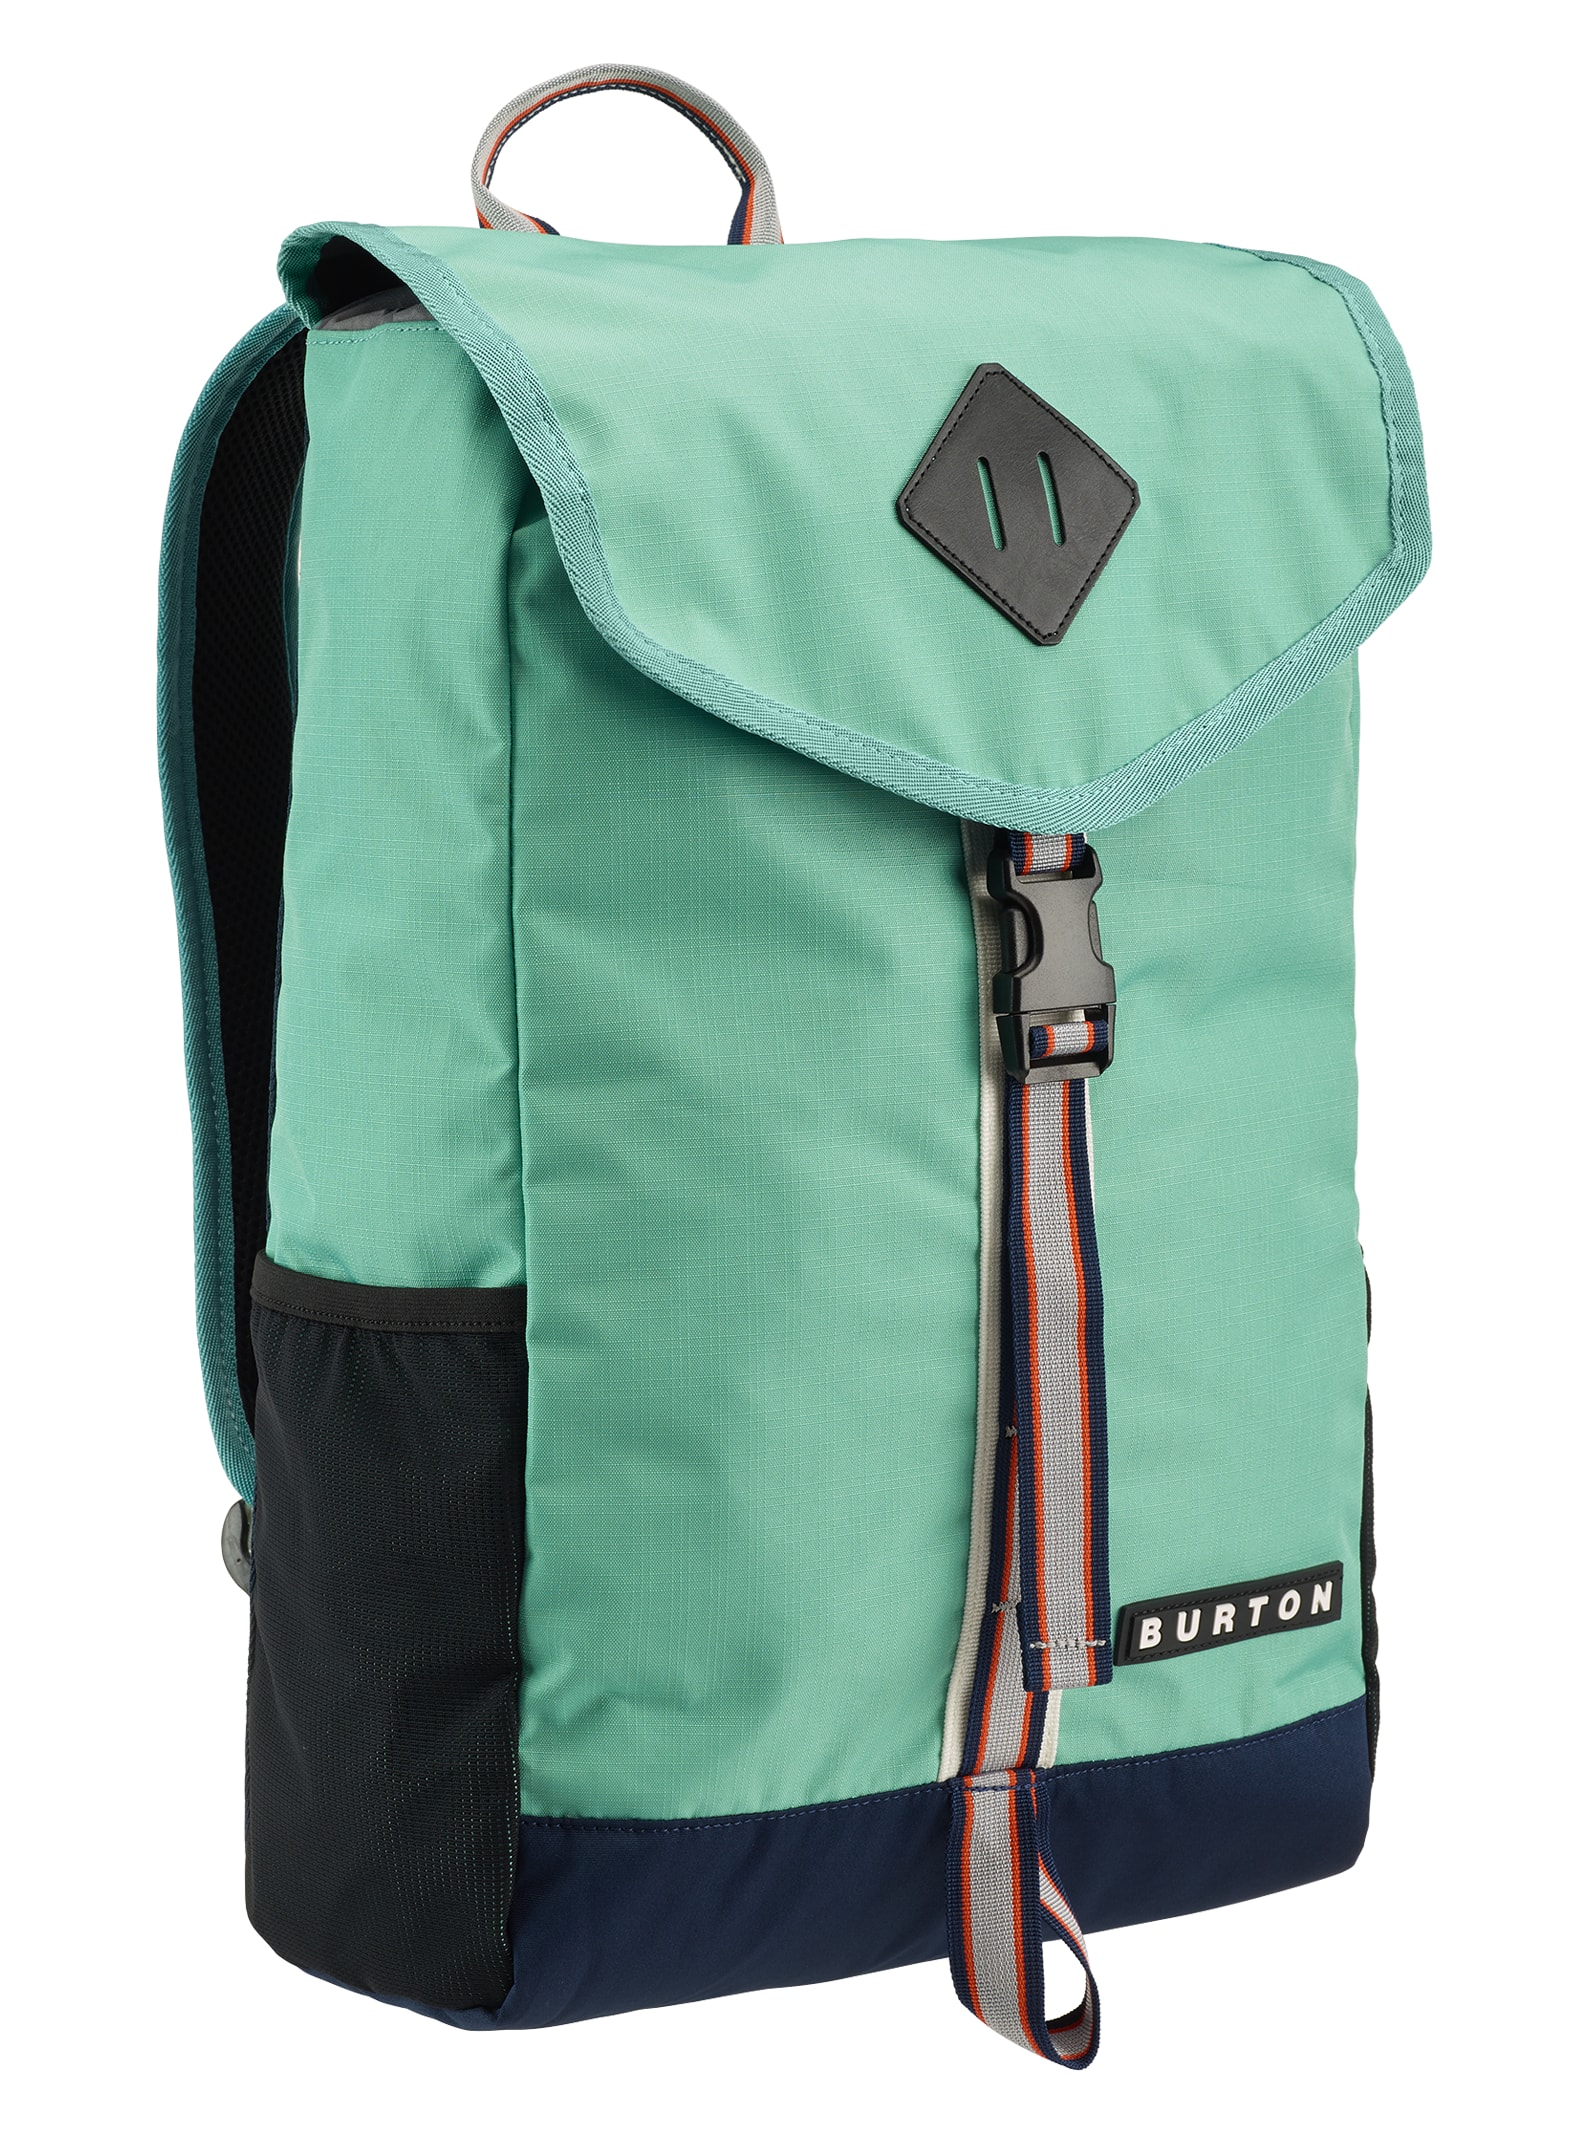 Burton Westfall 23L Backpack | Burton.com Spring 2020 US